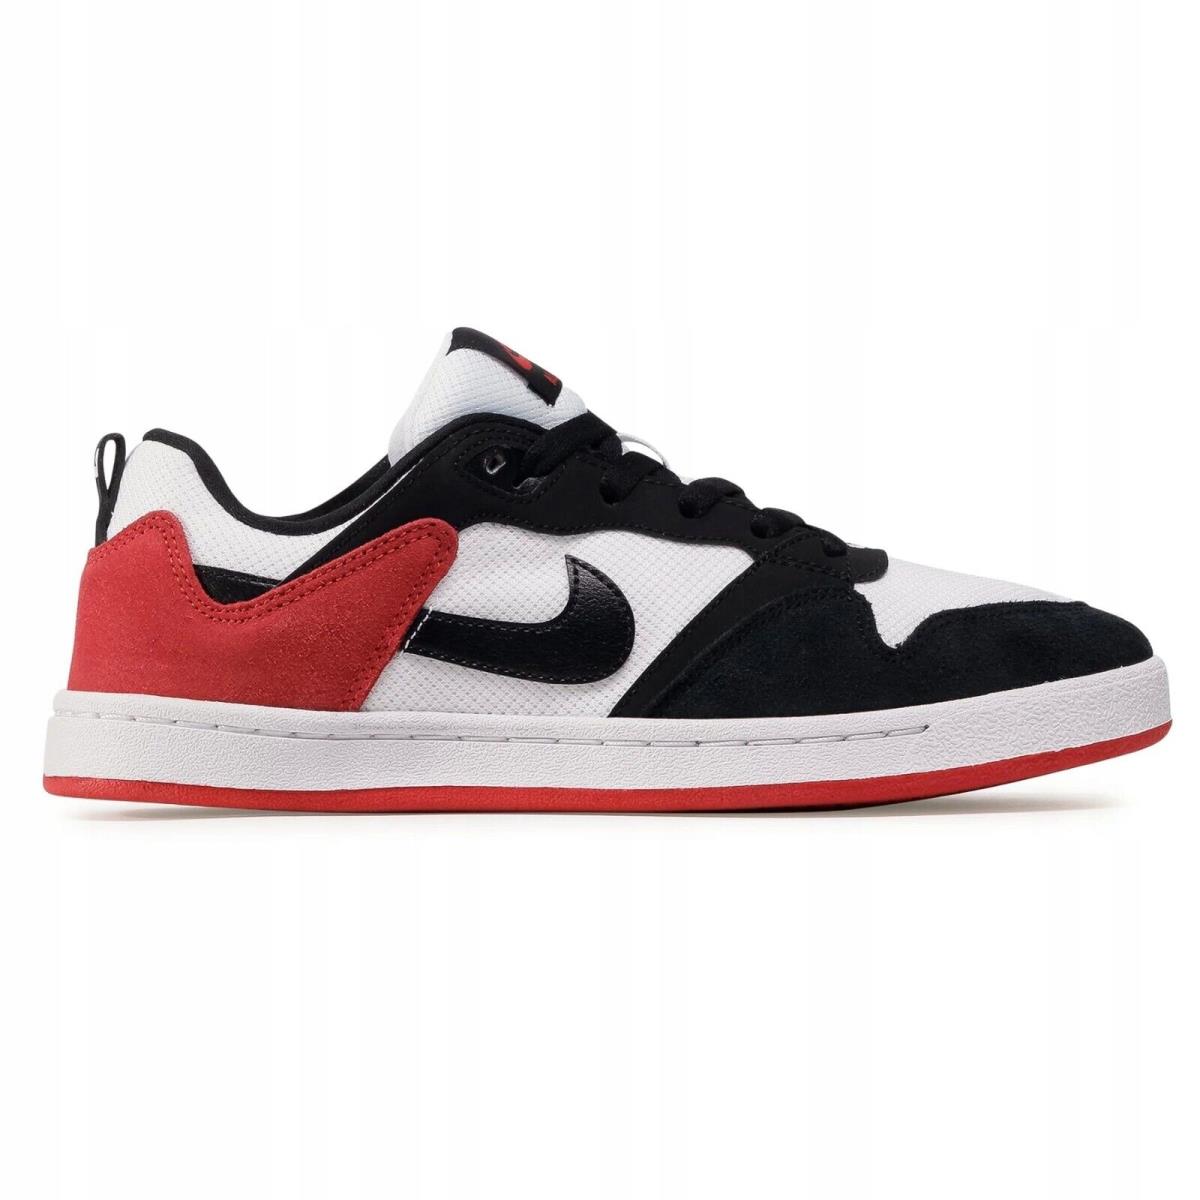 Nike Alleyoop SB CJ0882-102 Men`s Black White Red Low Top Sneaker Shoes XXX535 - Black White Red